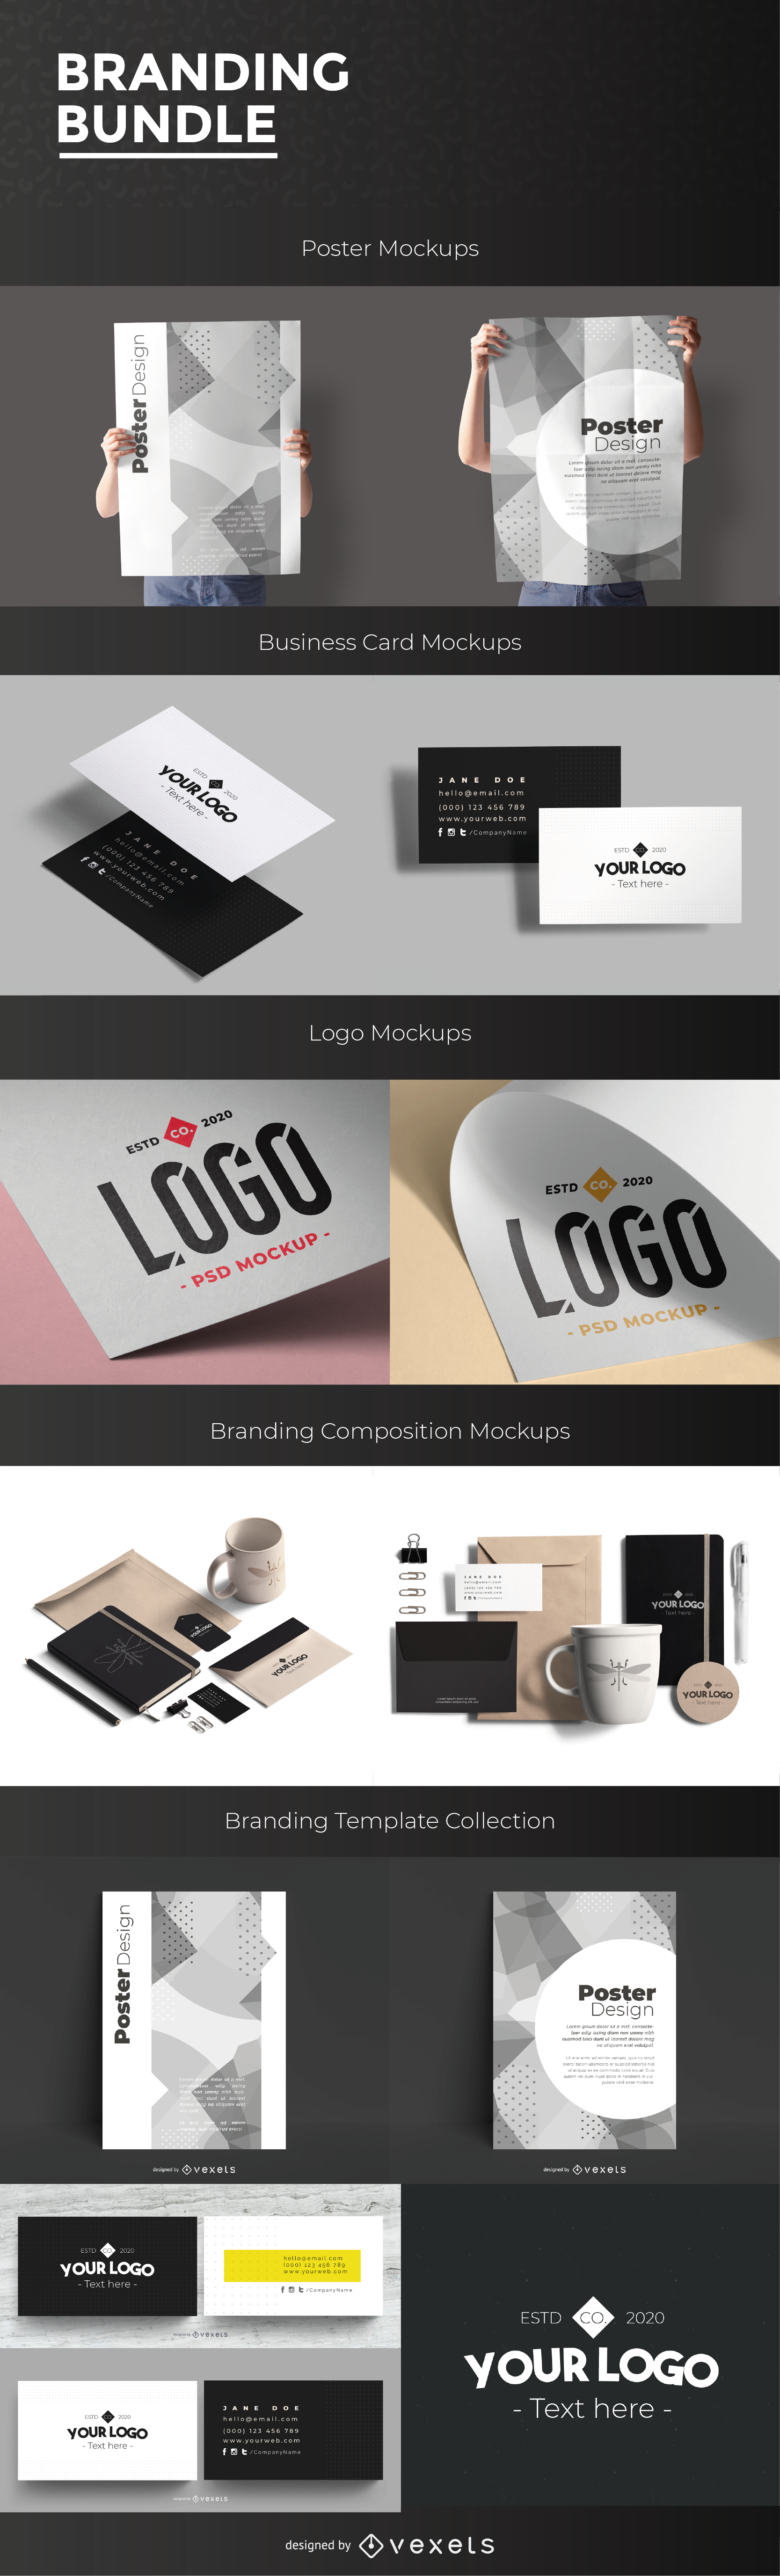 Download Freebie Branding Mockup Template Bundle Logos Cards Posters Just Creative PSD Mockup Templates